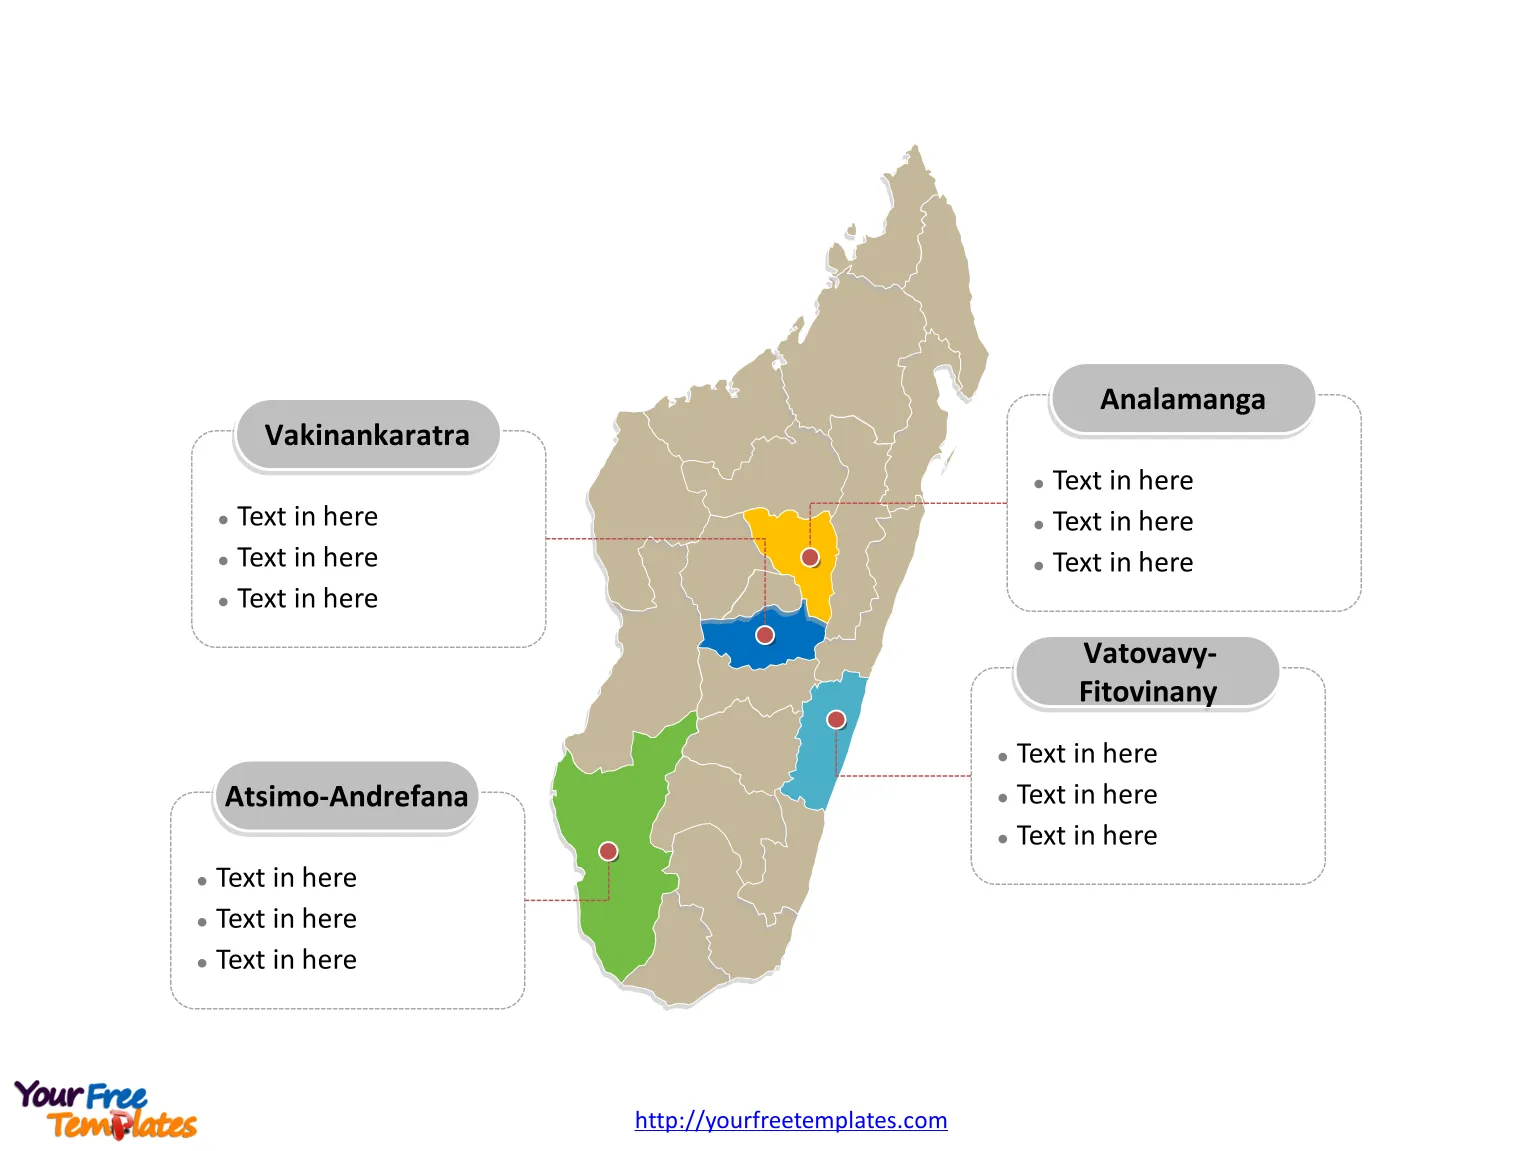 Madagascar Region map labeled with major regions